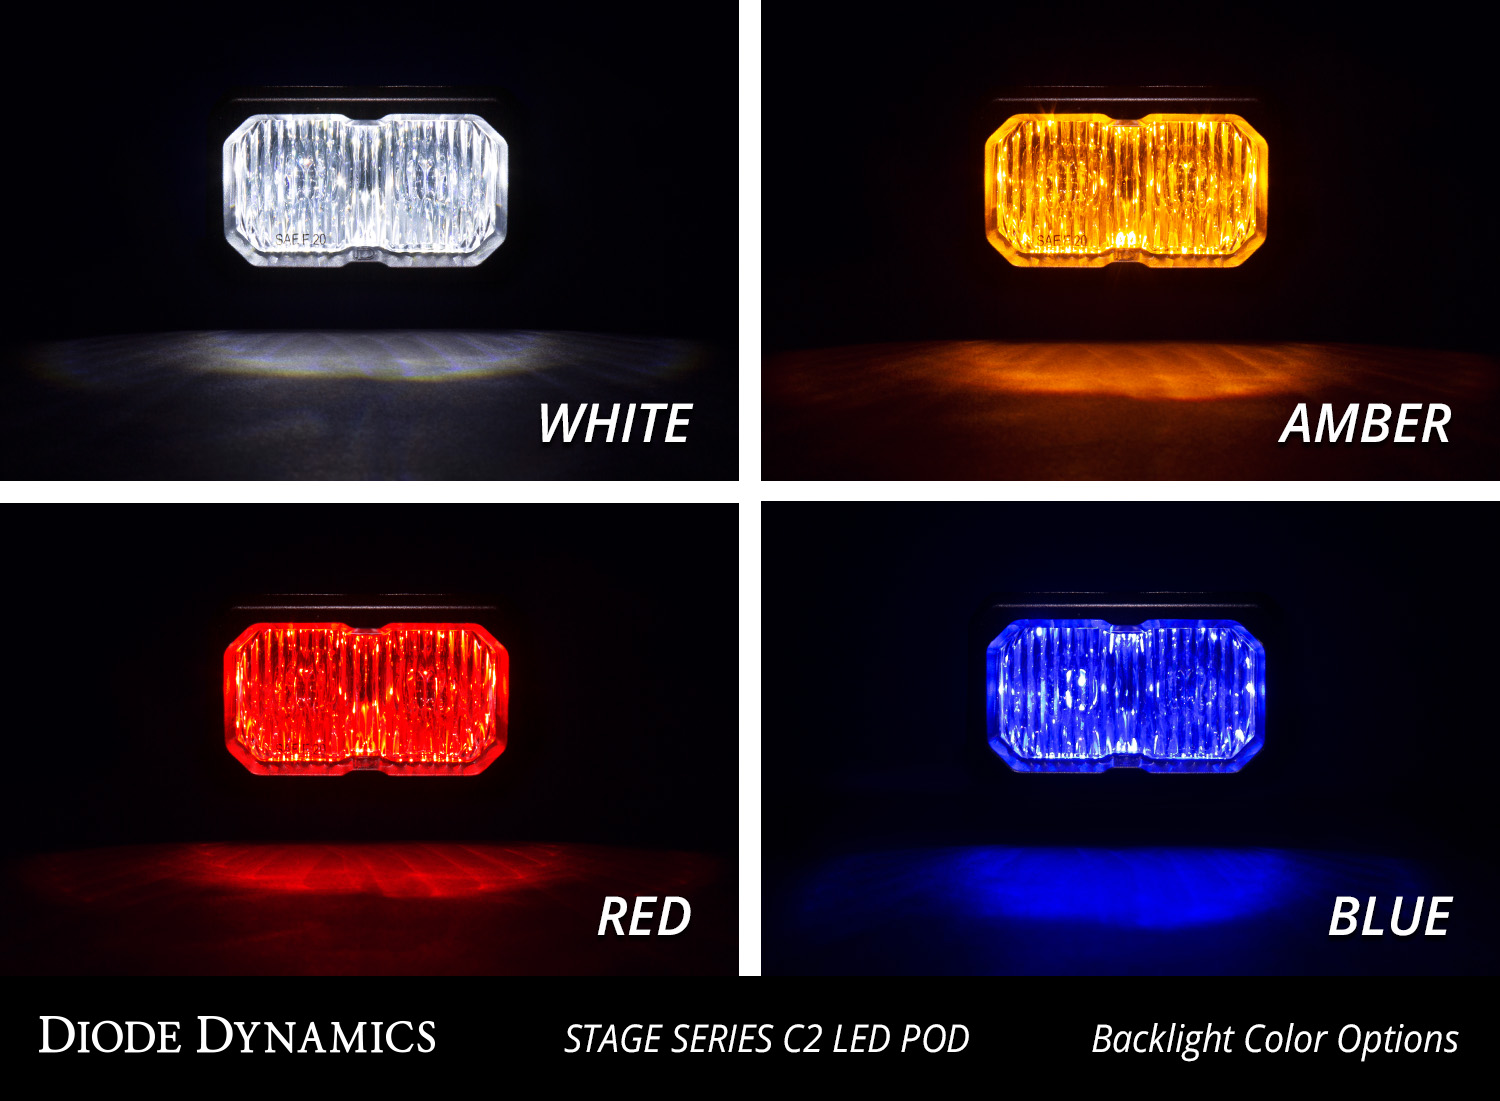 Diode Dynamics Stage Series 2 Inch LED Pod, Pro White Fog Flush ABL Each